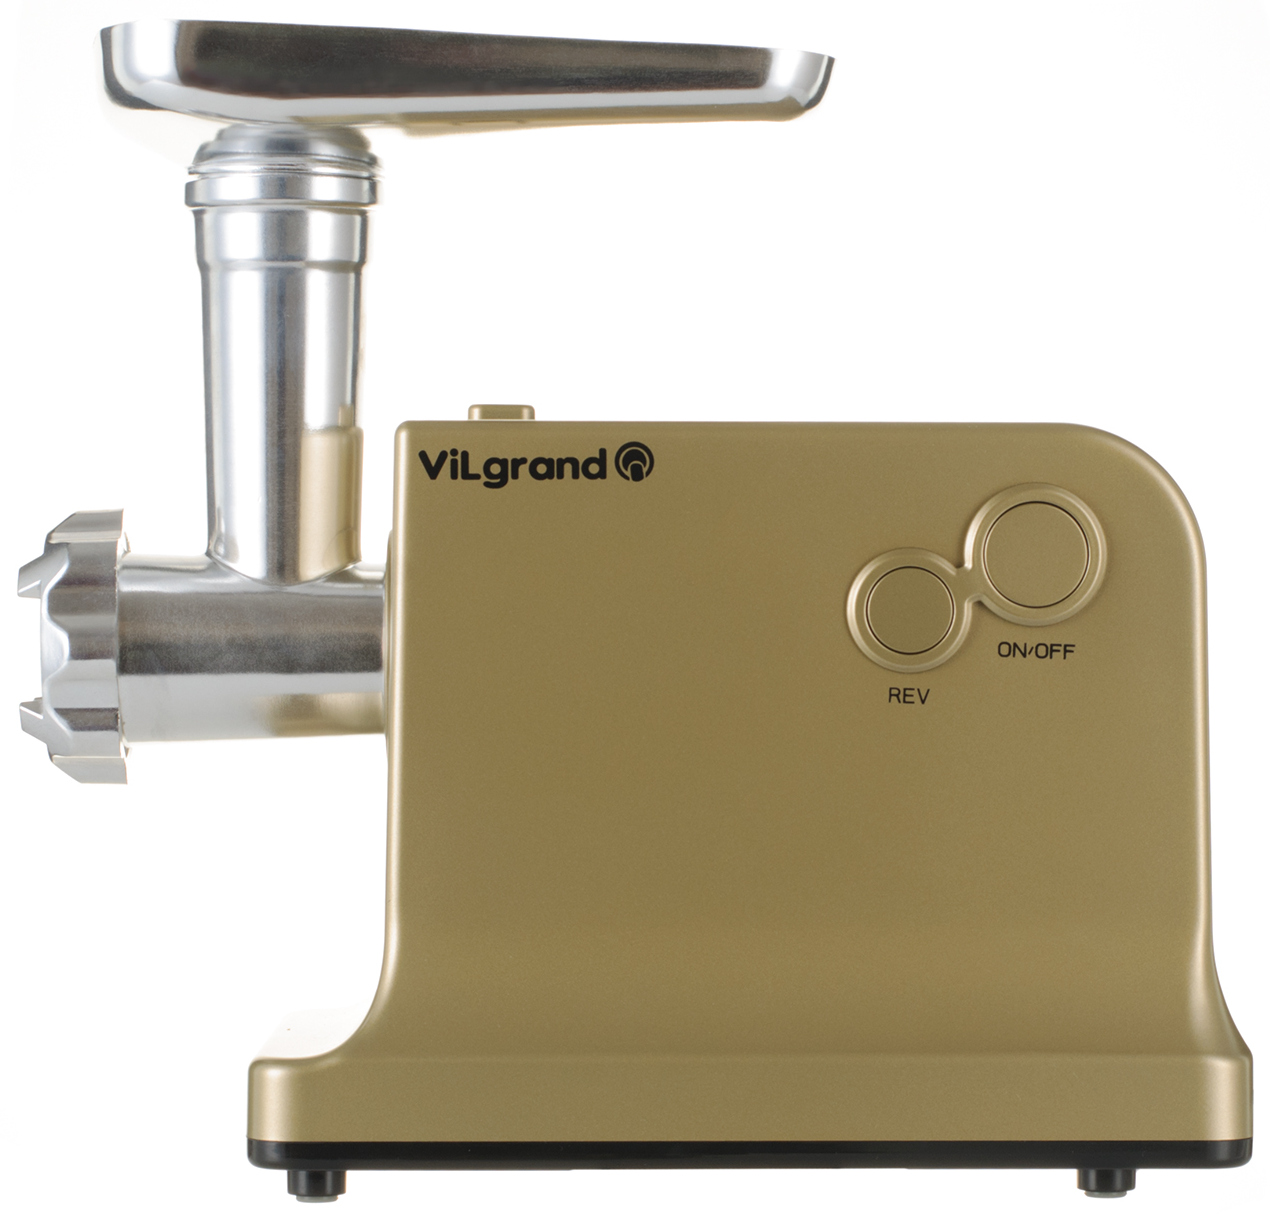 Электромясорубка Vilgrand V221-PMG Gold в интернет-магазине, главное фото